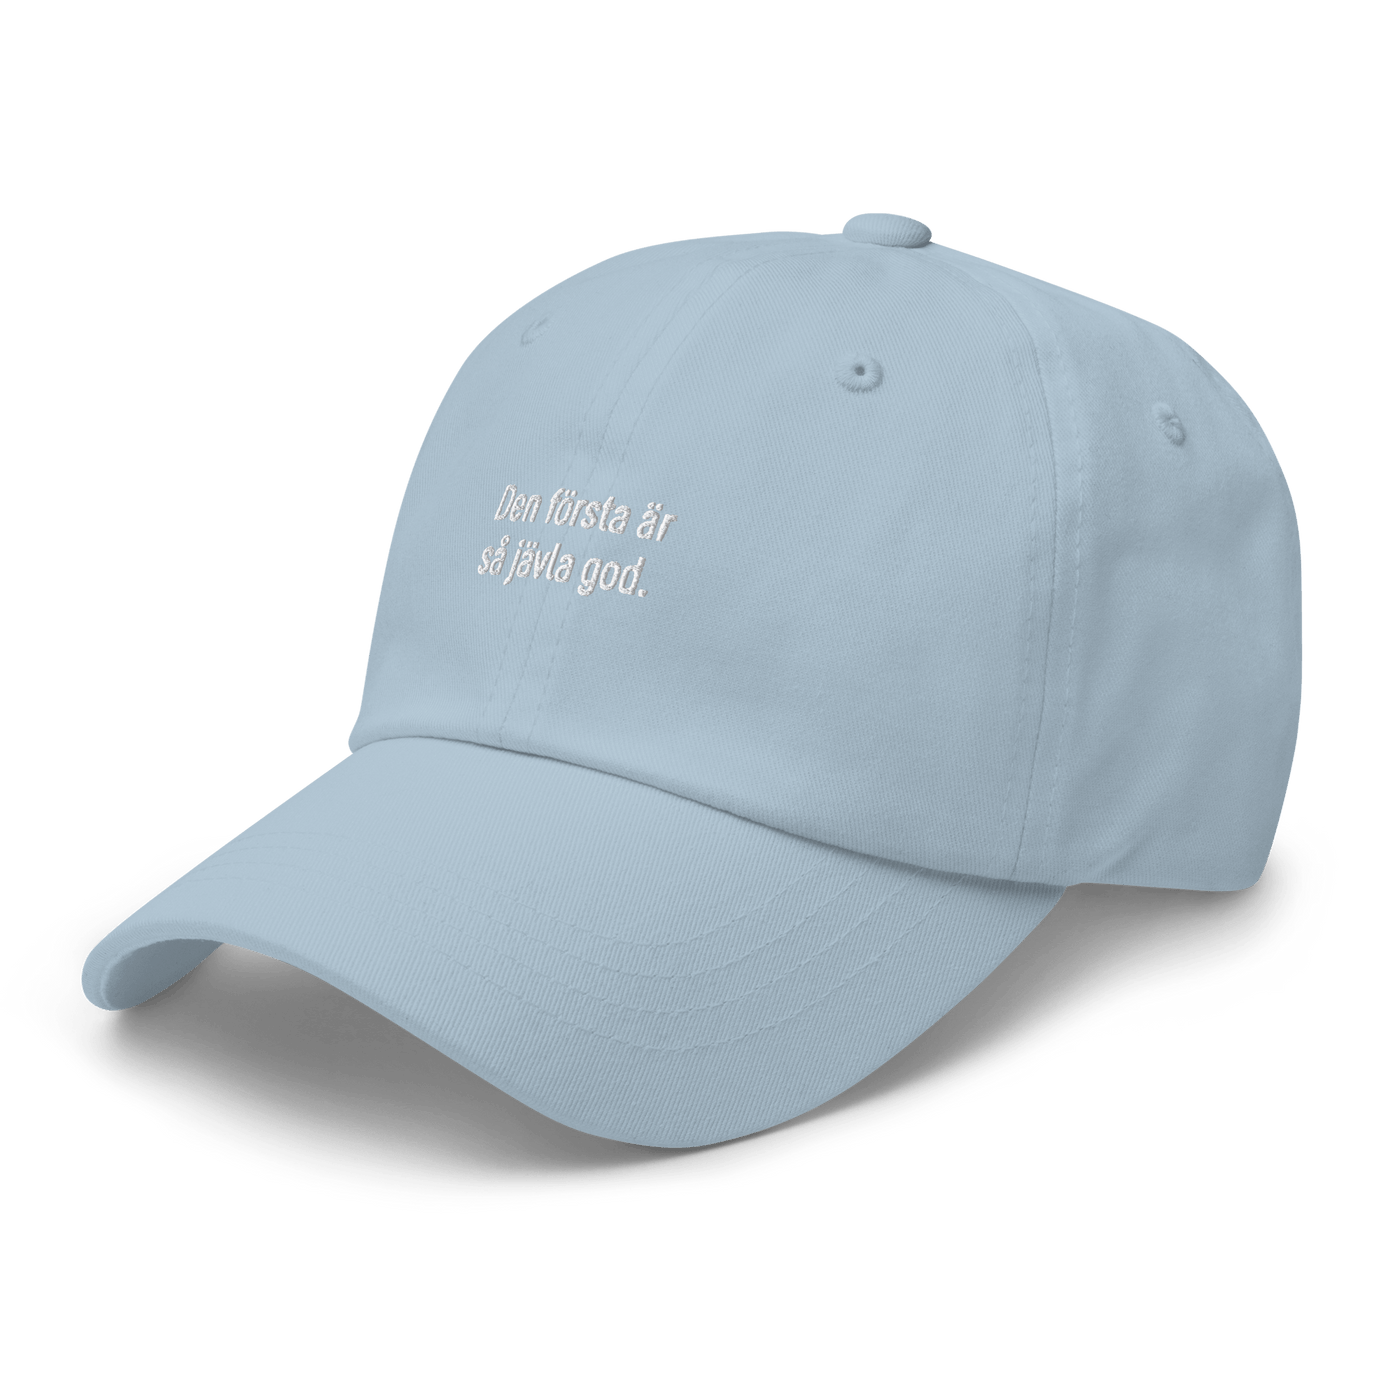 Den första Dad hat - Light Blue - - Just Another Cap Store